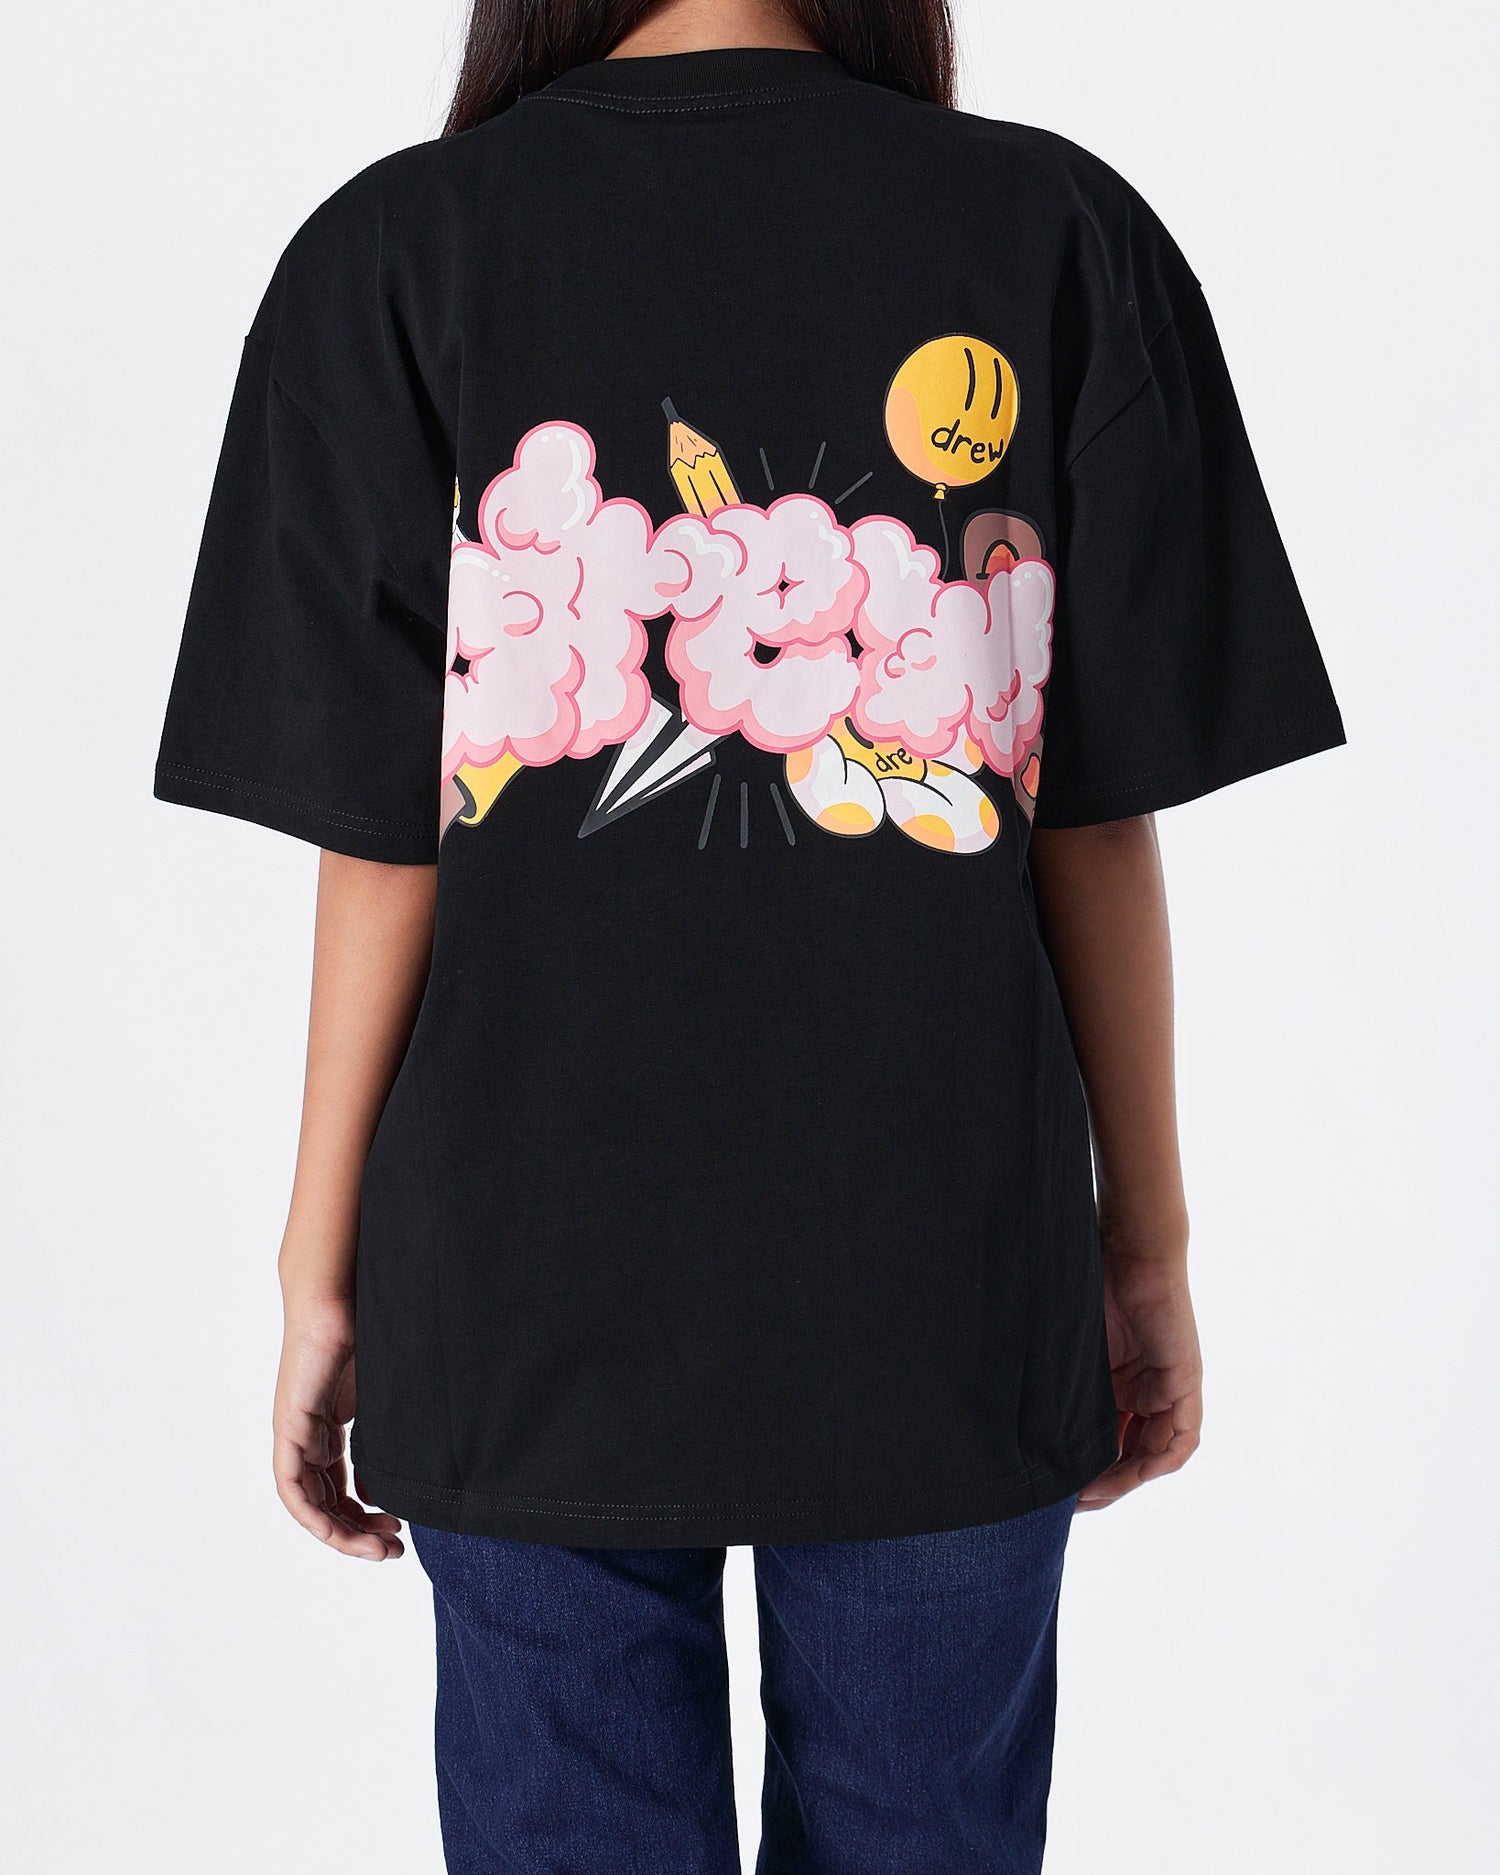 MOI OUTFIT-DRE Cloudy Back Unisex Black T-Shirt 20.90